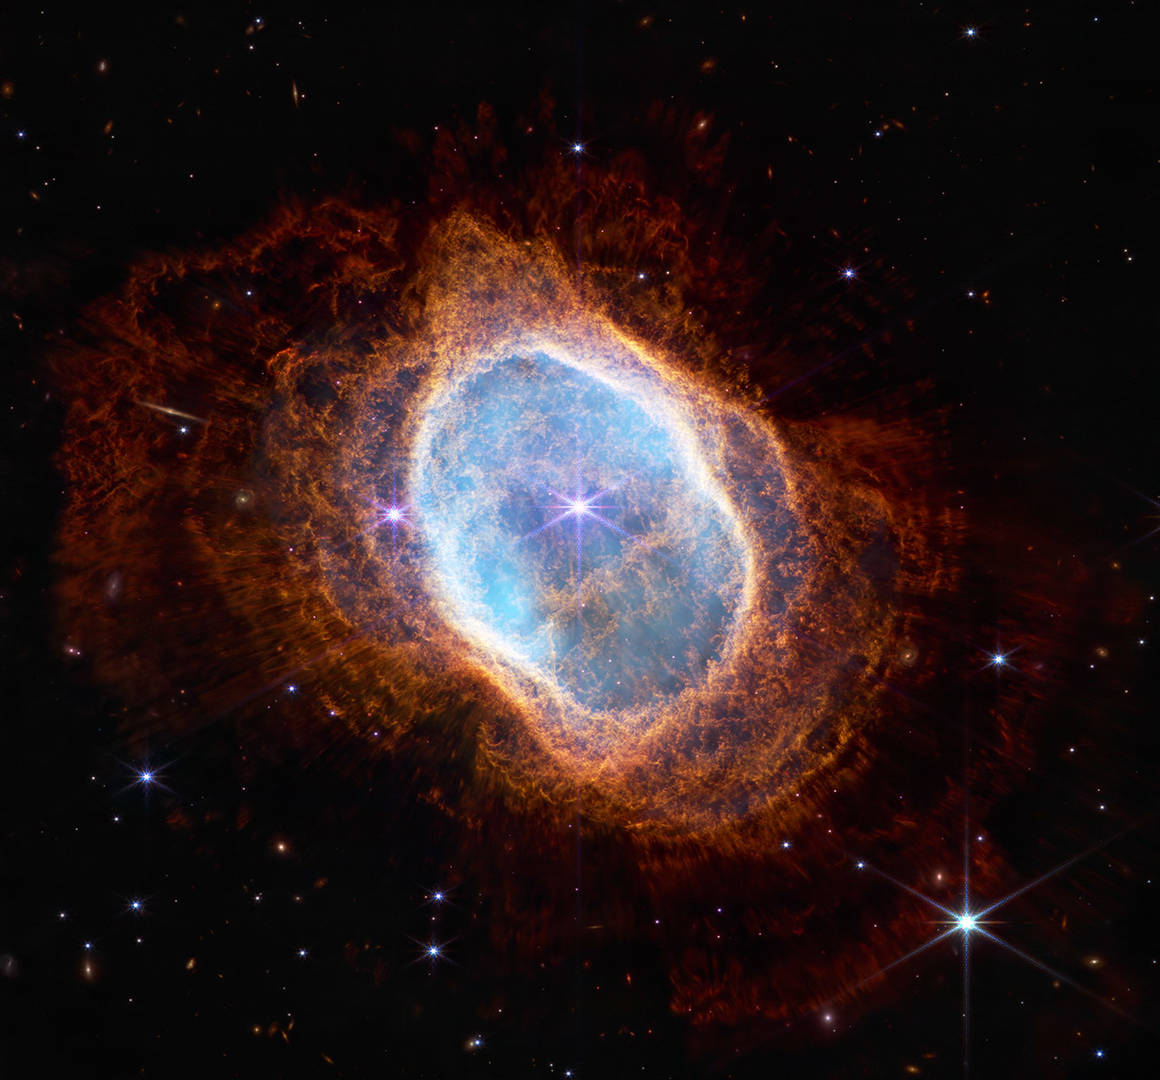 JSWT First Images - Southern Ring Nebula